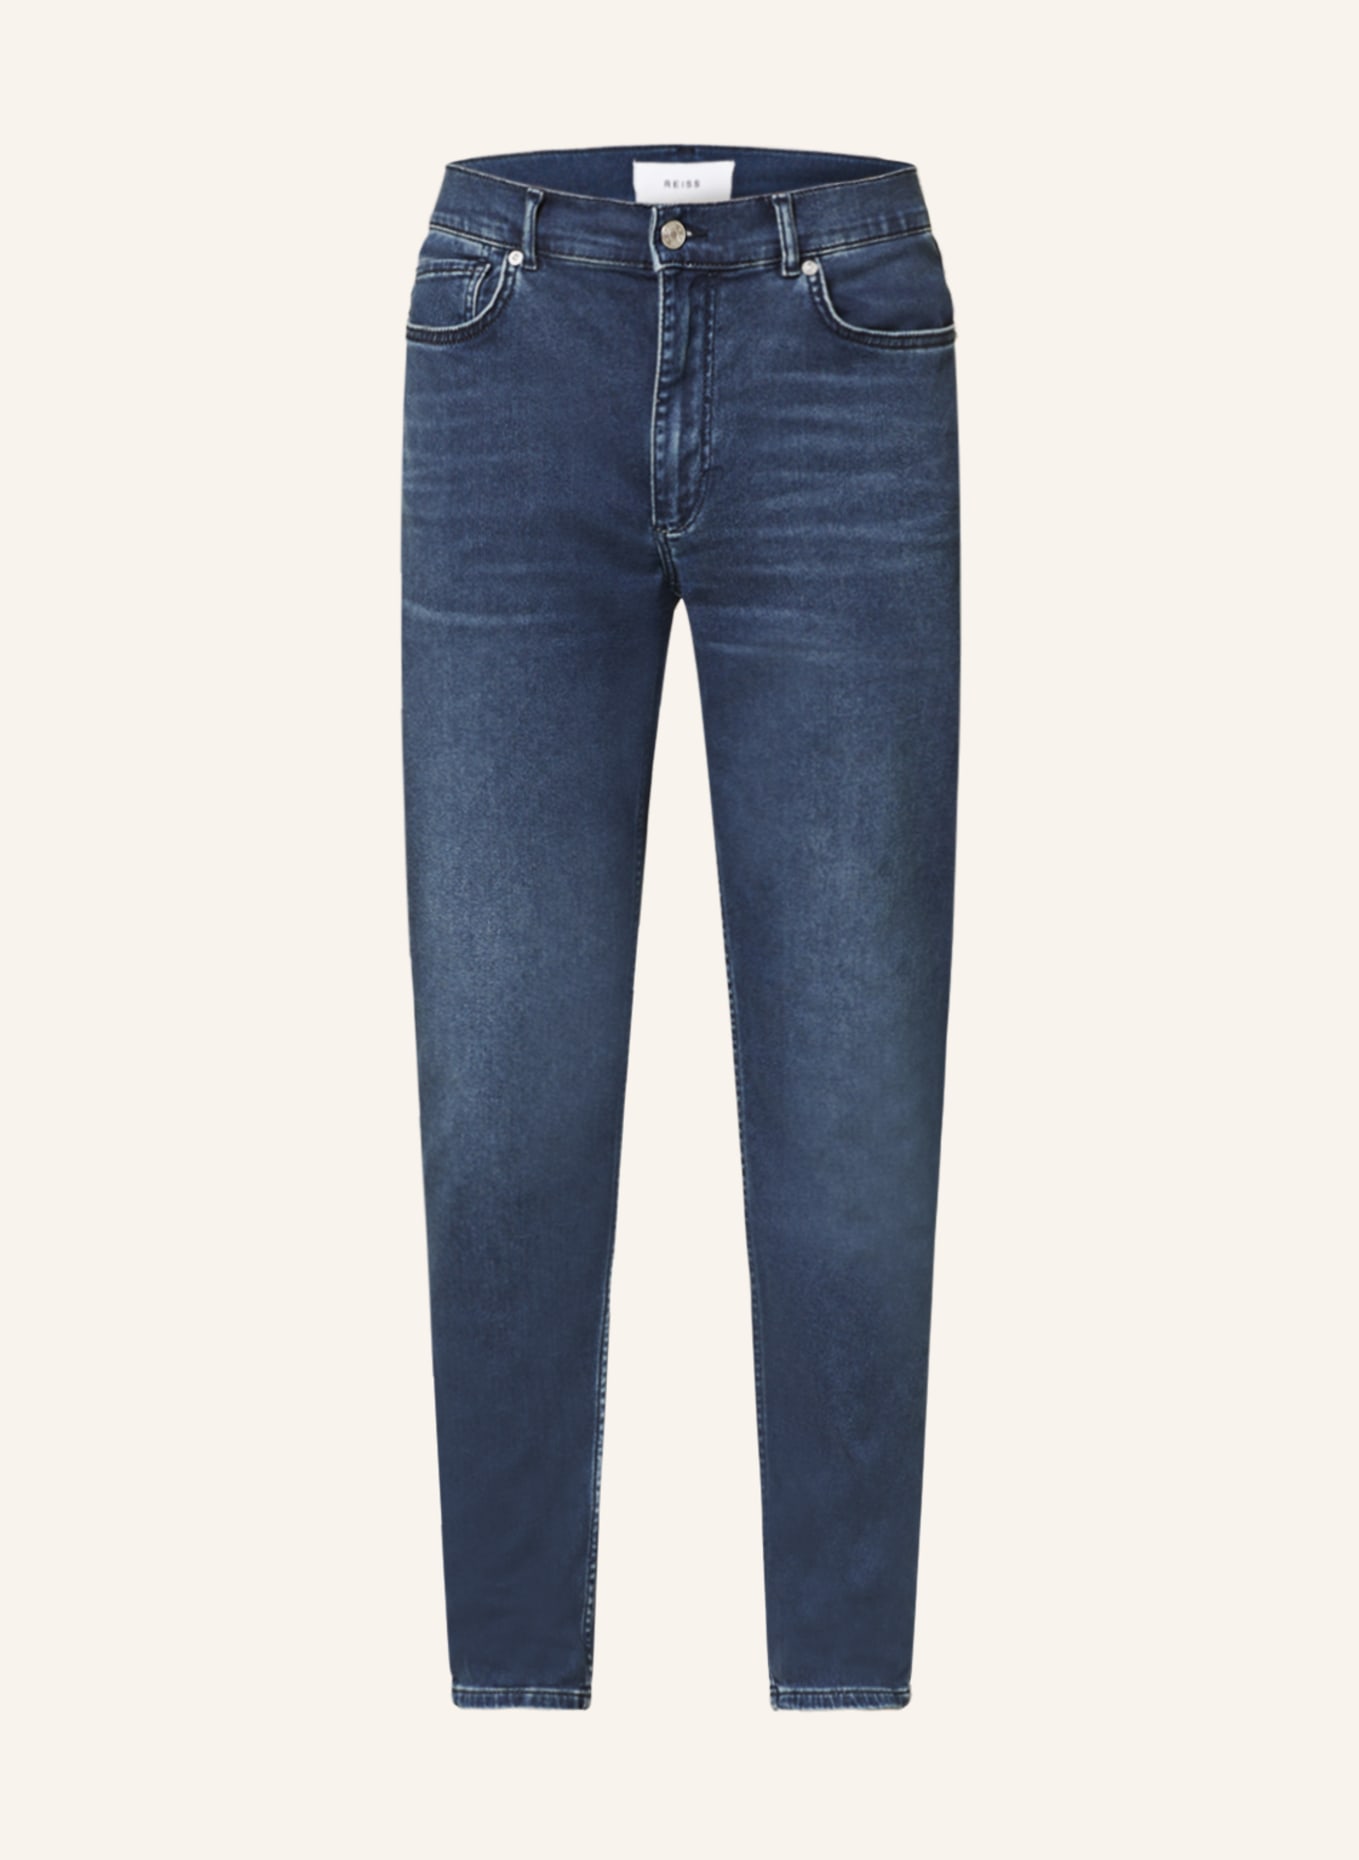 REISS Jeans ARDANA Slim Fit, Farbe: 45 INDIGO (Bild 1)